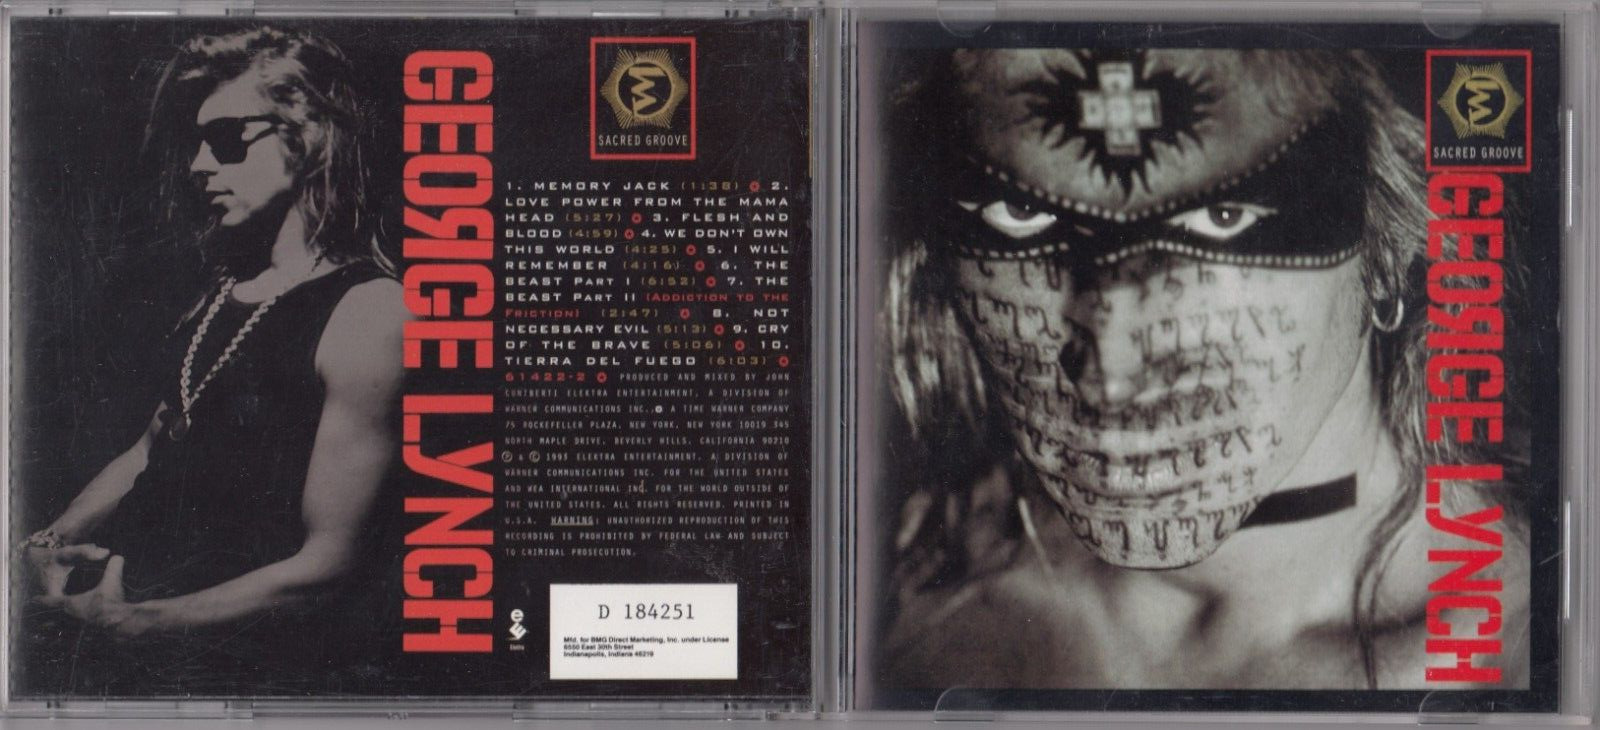 George Lynch - Sacred Groove (CD, Aug-1993, Elektra (Label))